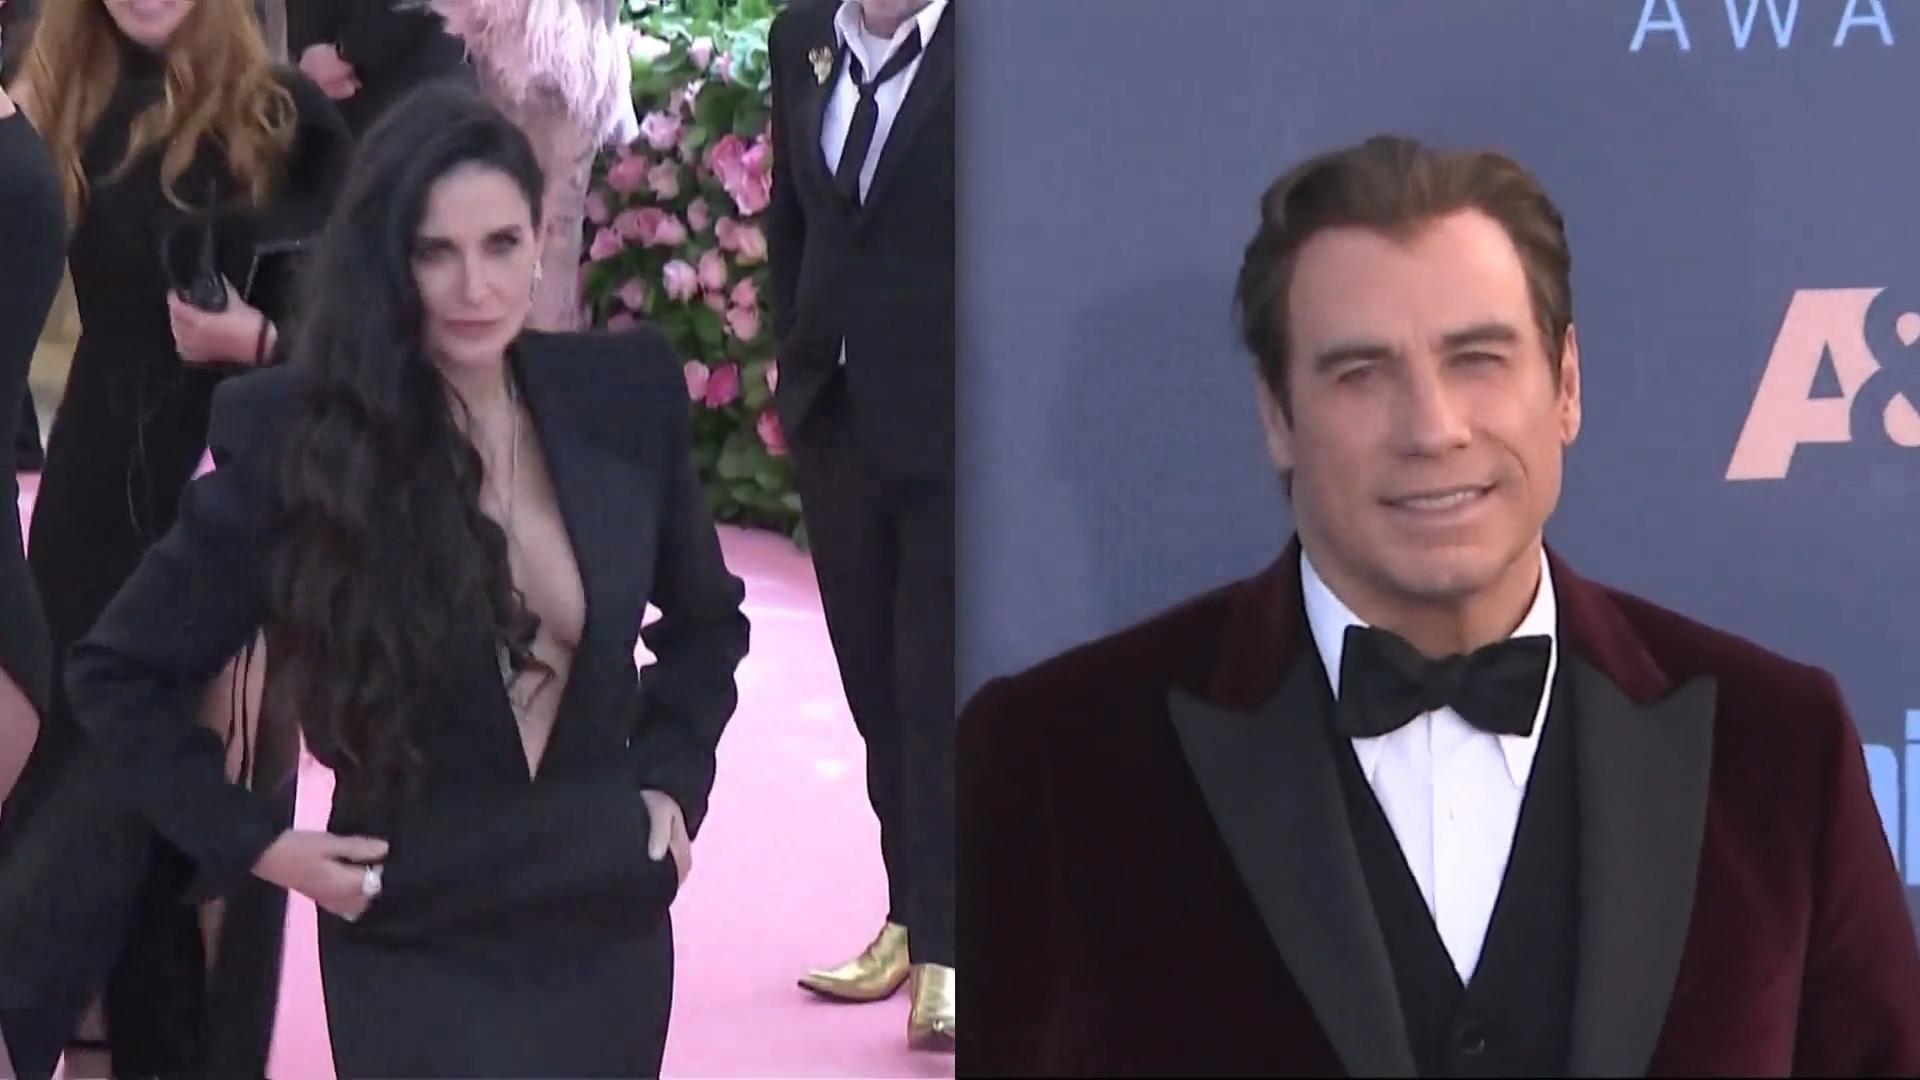 Datet Demi Moore jetzt etwa John Travolta? Gerüchteküche brodelt